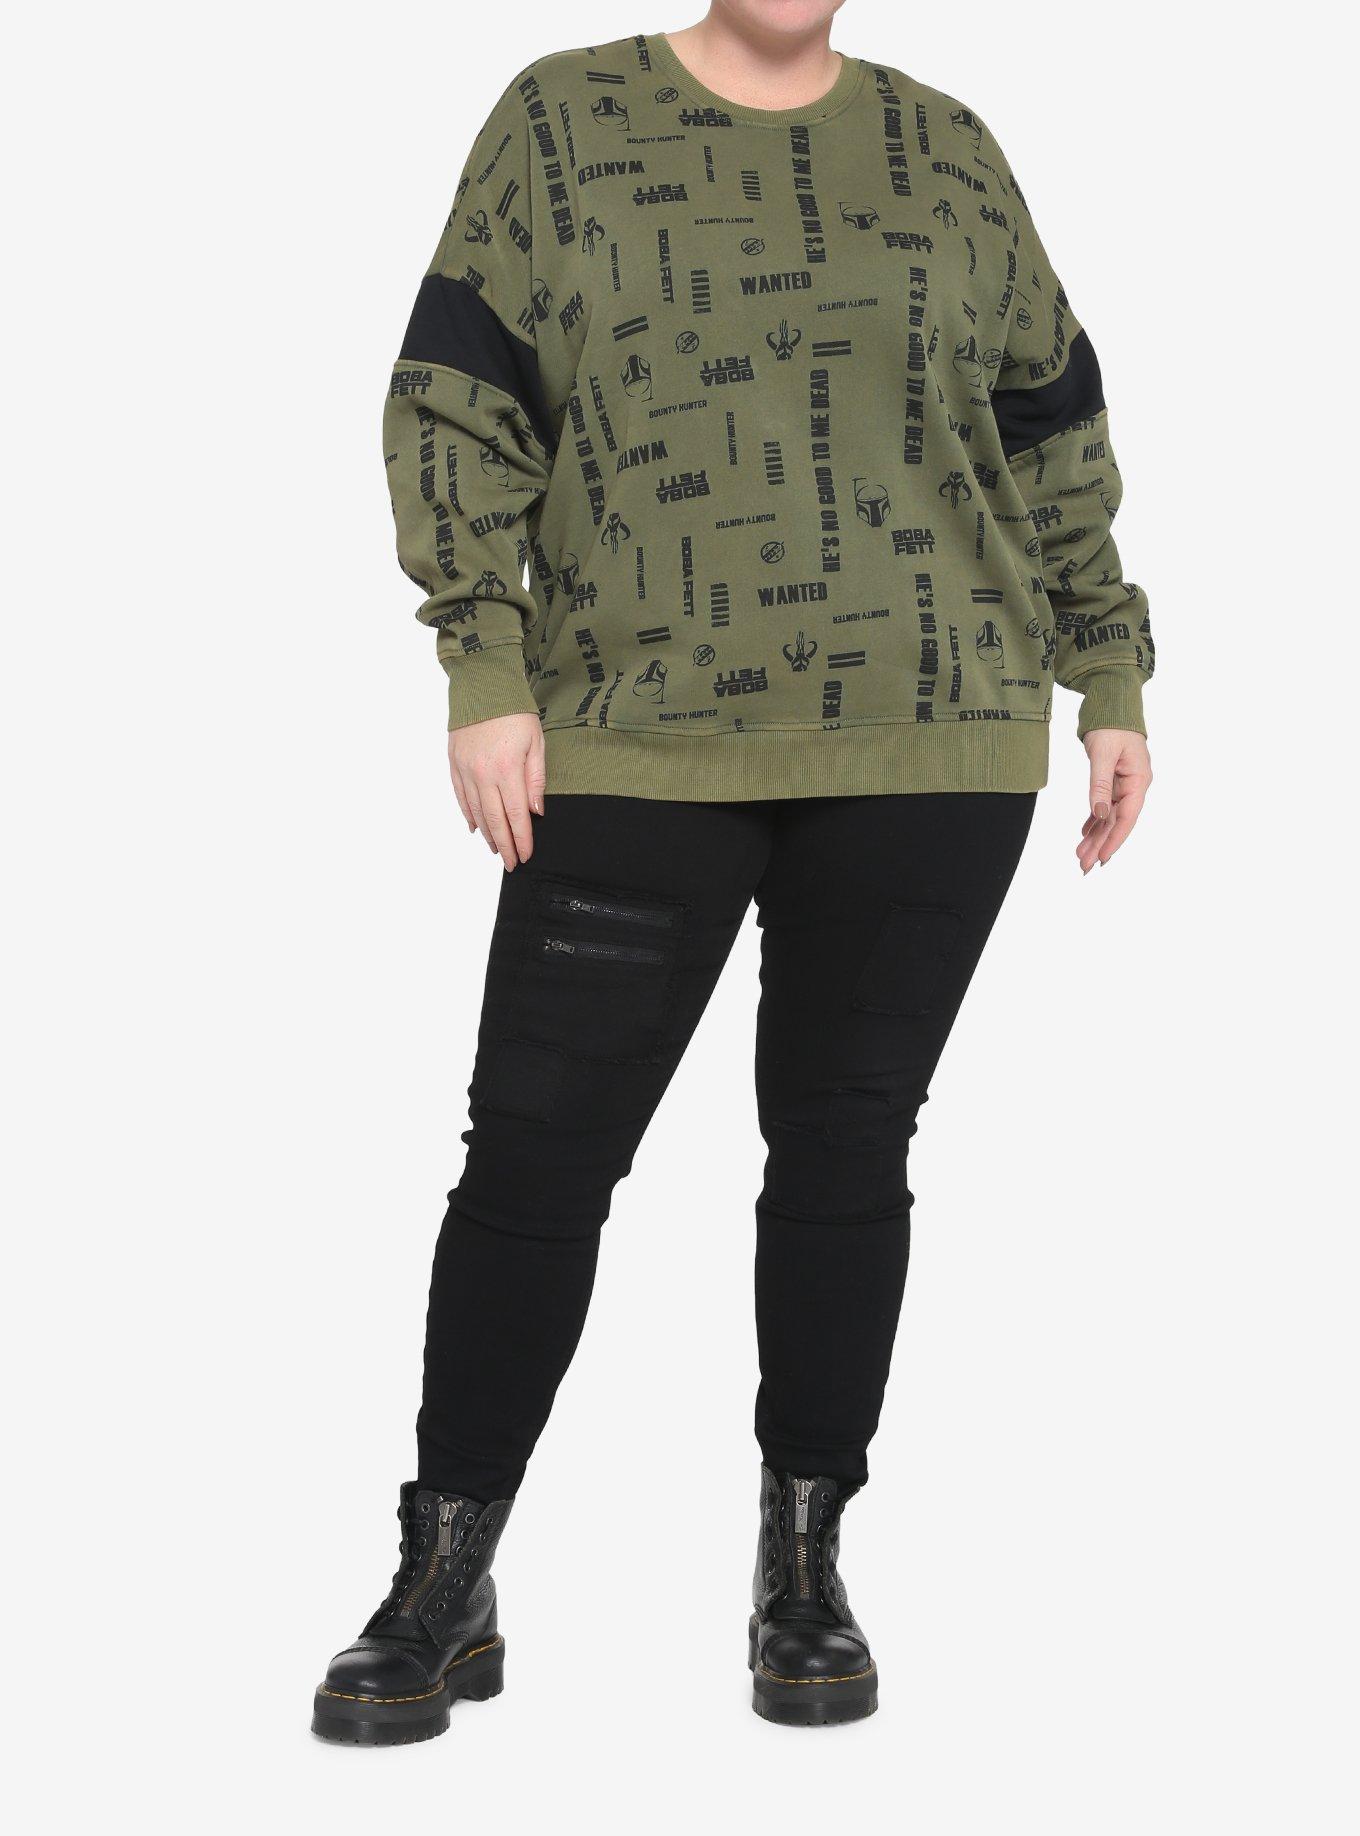 Her Universe Star Wars Boba Fett Logos Girls Sweatshirt Plus Size, BLACK, alternate